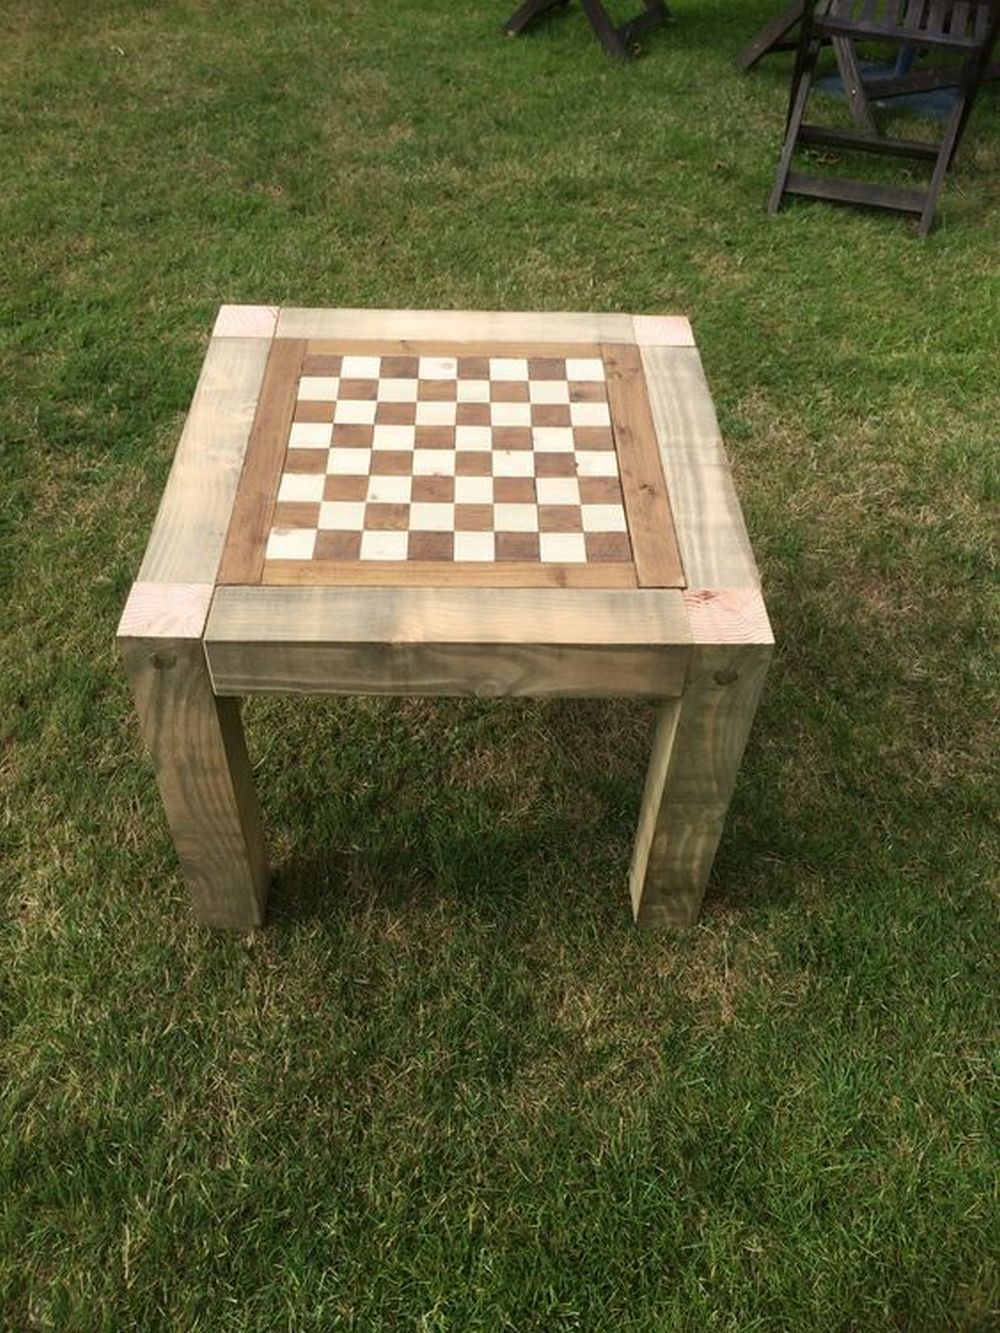 DIY Garden Chess Board Your ProjectsOBN